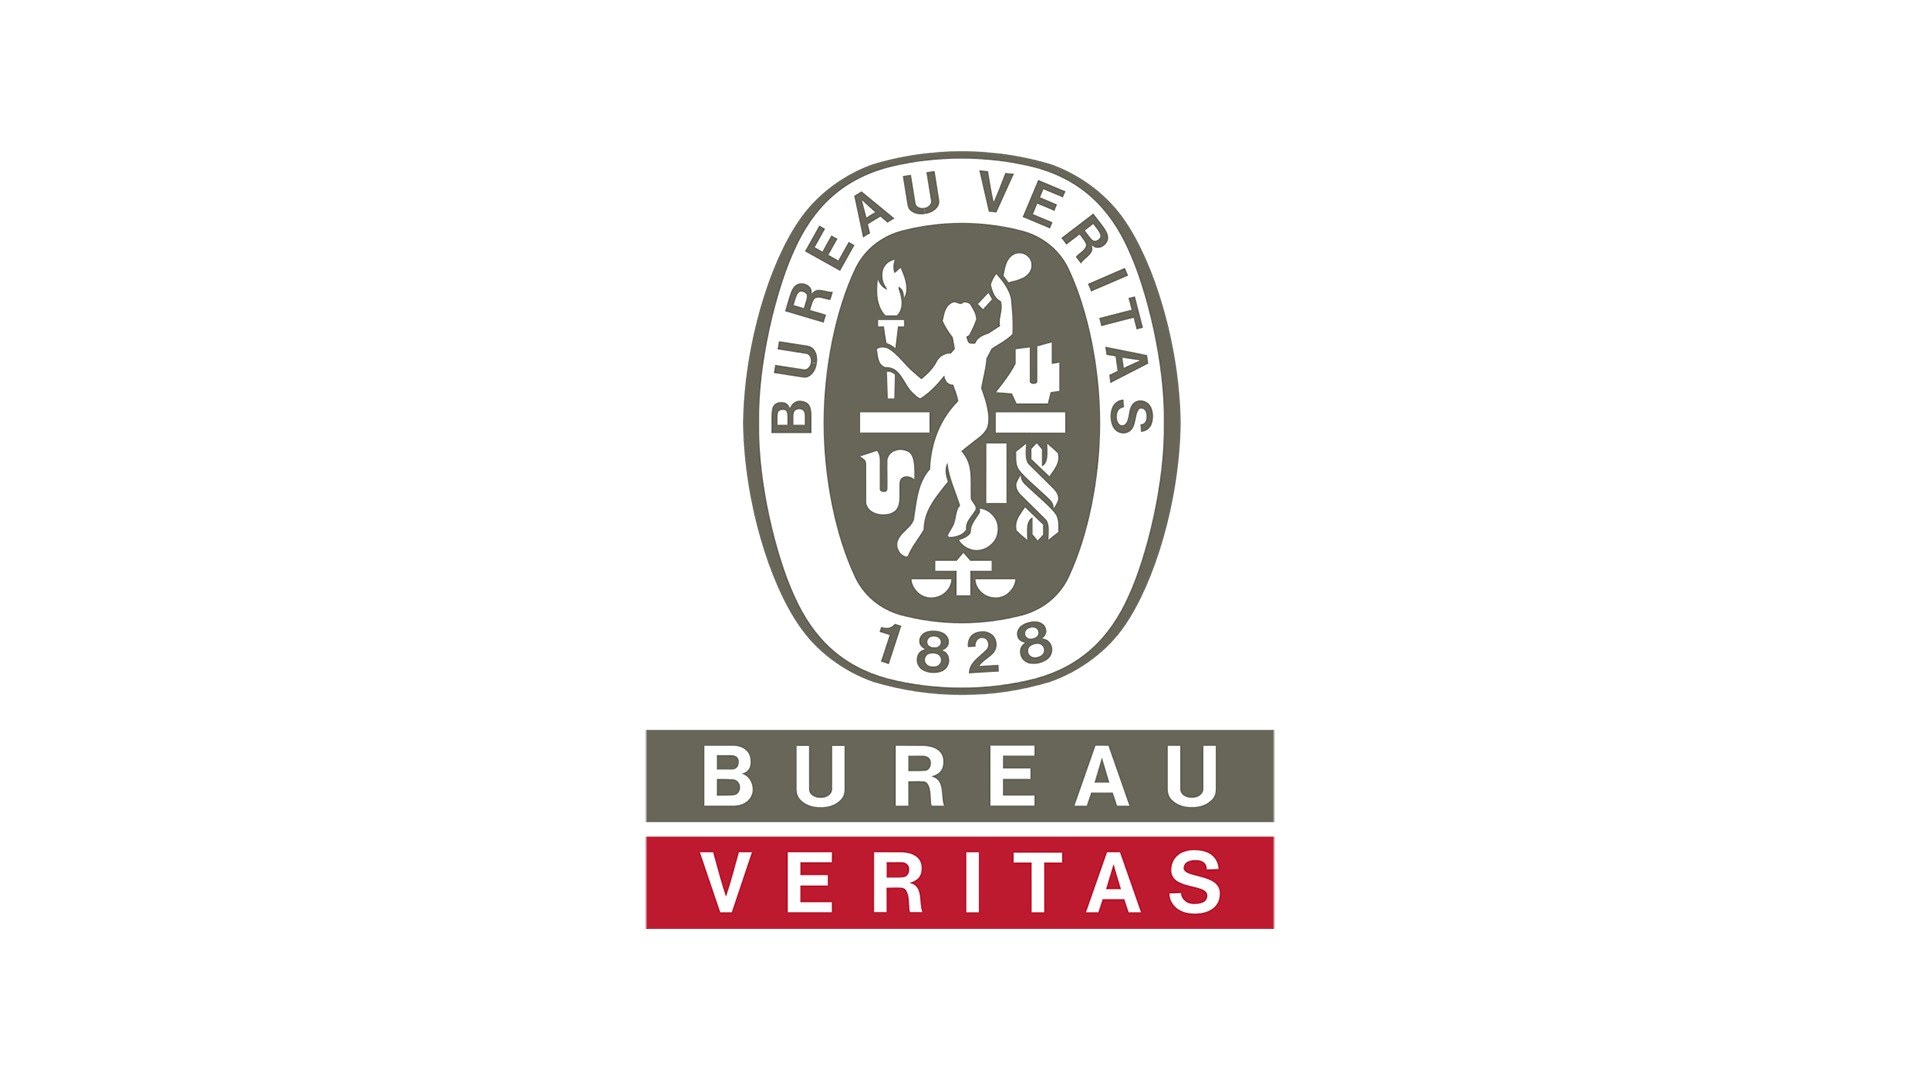 Veritas Logo - Bureau Veritas logo